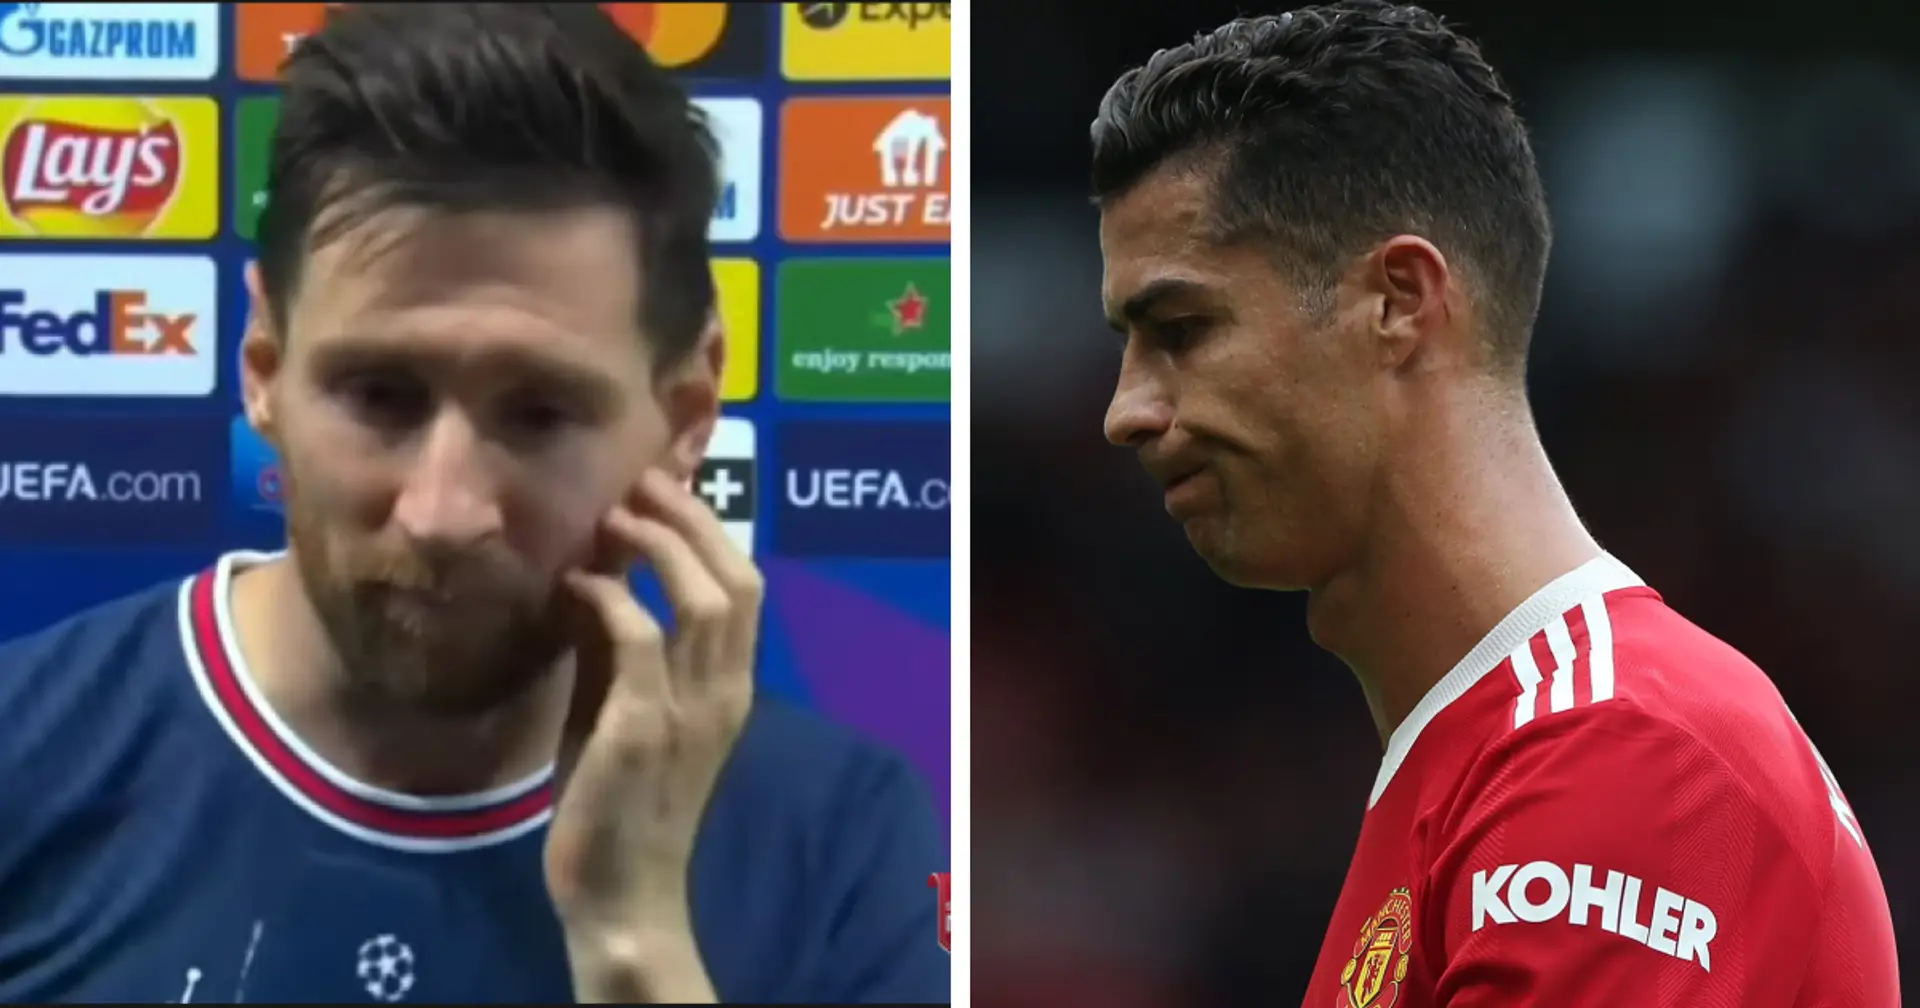 Who's had a worse season: Messi or Ronaldo? Answered